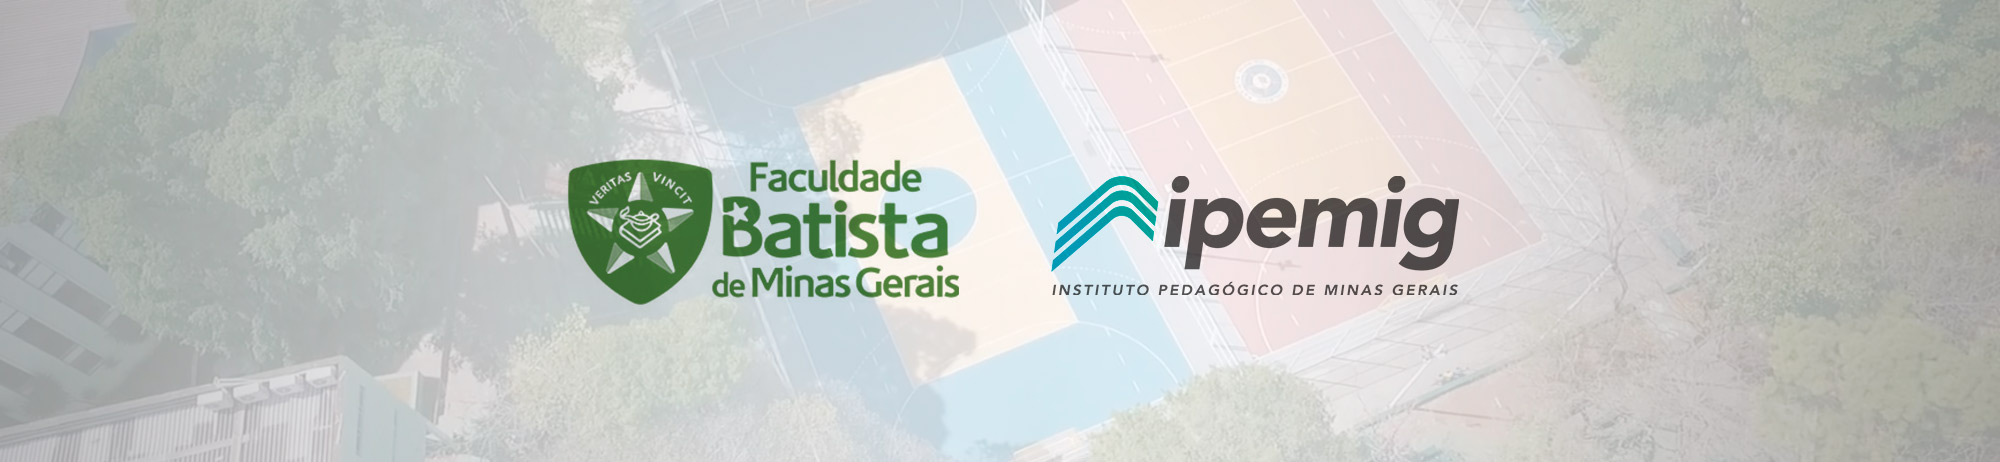 , <span class="dojodigital_toggle_title">Grupo IPEMIG se une a Faculdade Batista de Minas Gerais</span>